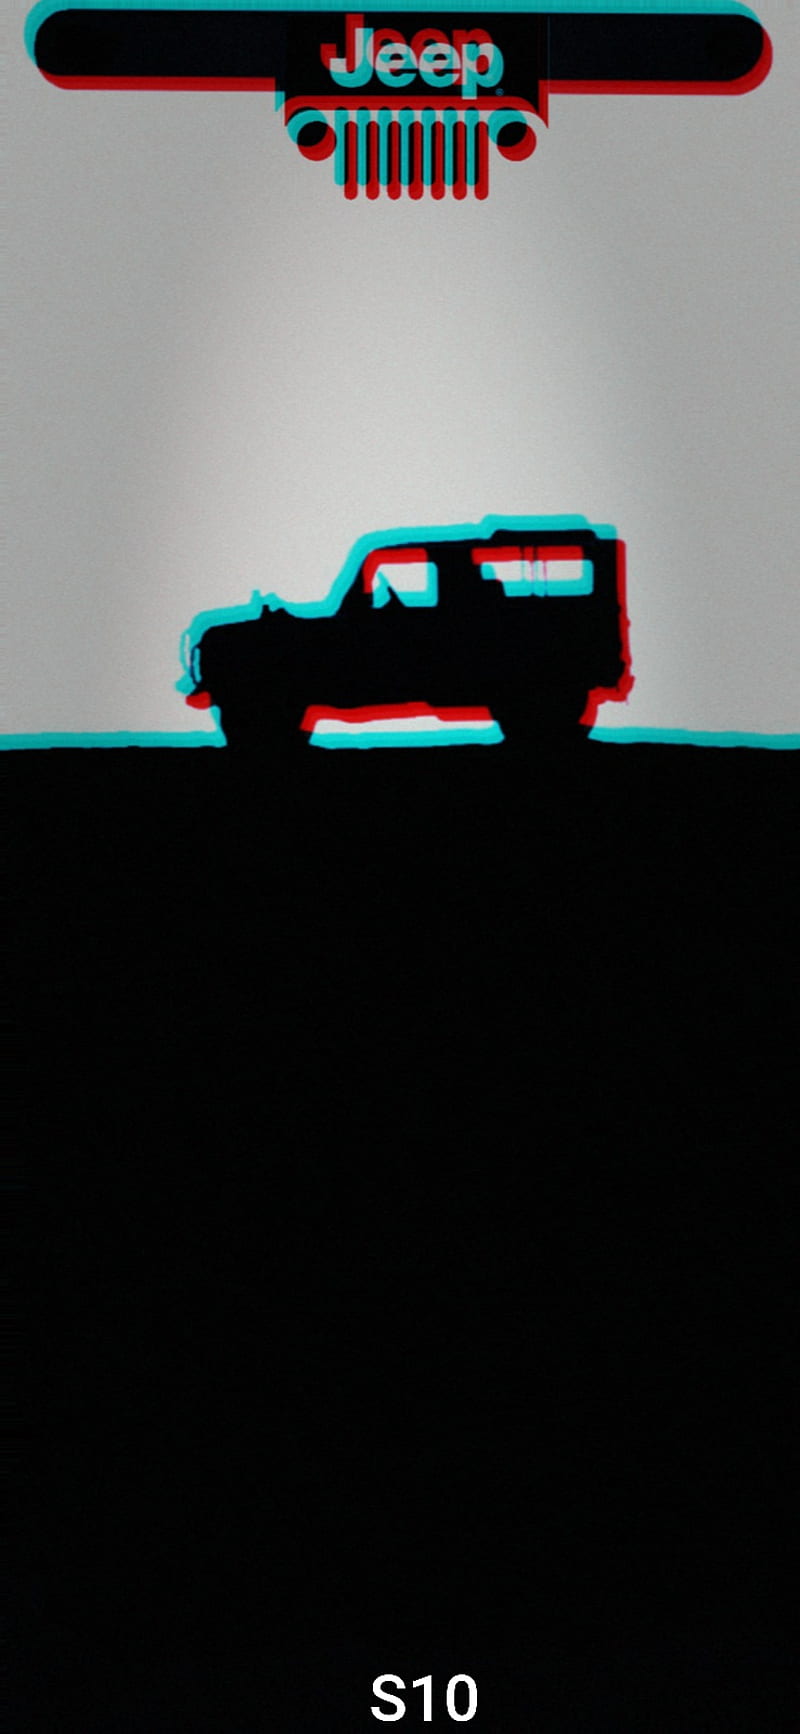 Jeep Wrangler Artwork, Logos, Badges, and Free Backgrounds – Rental Jeeps